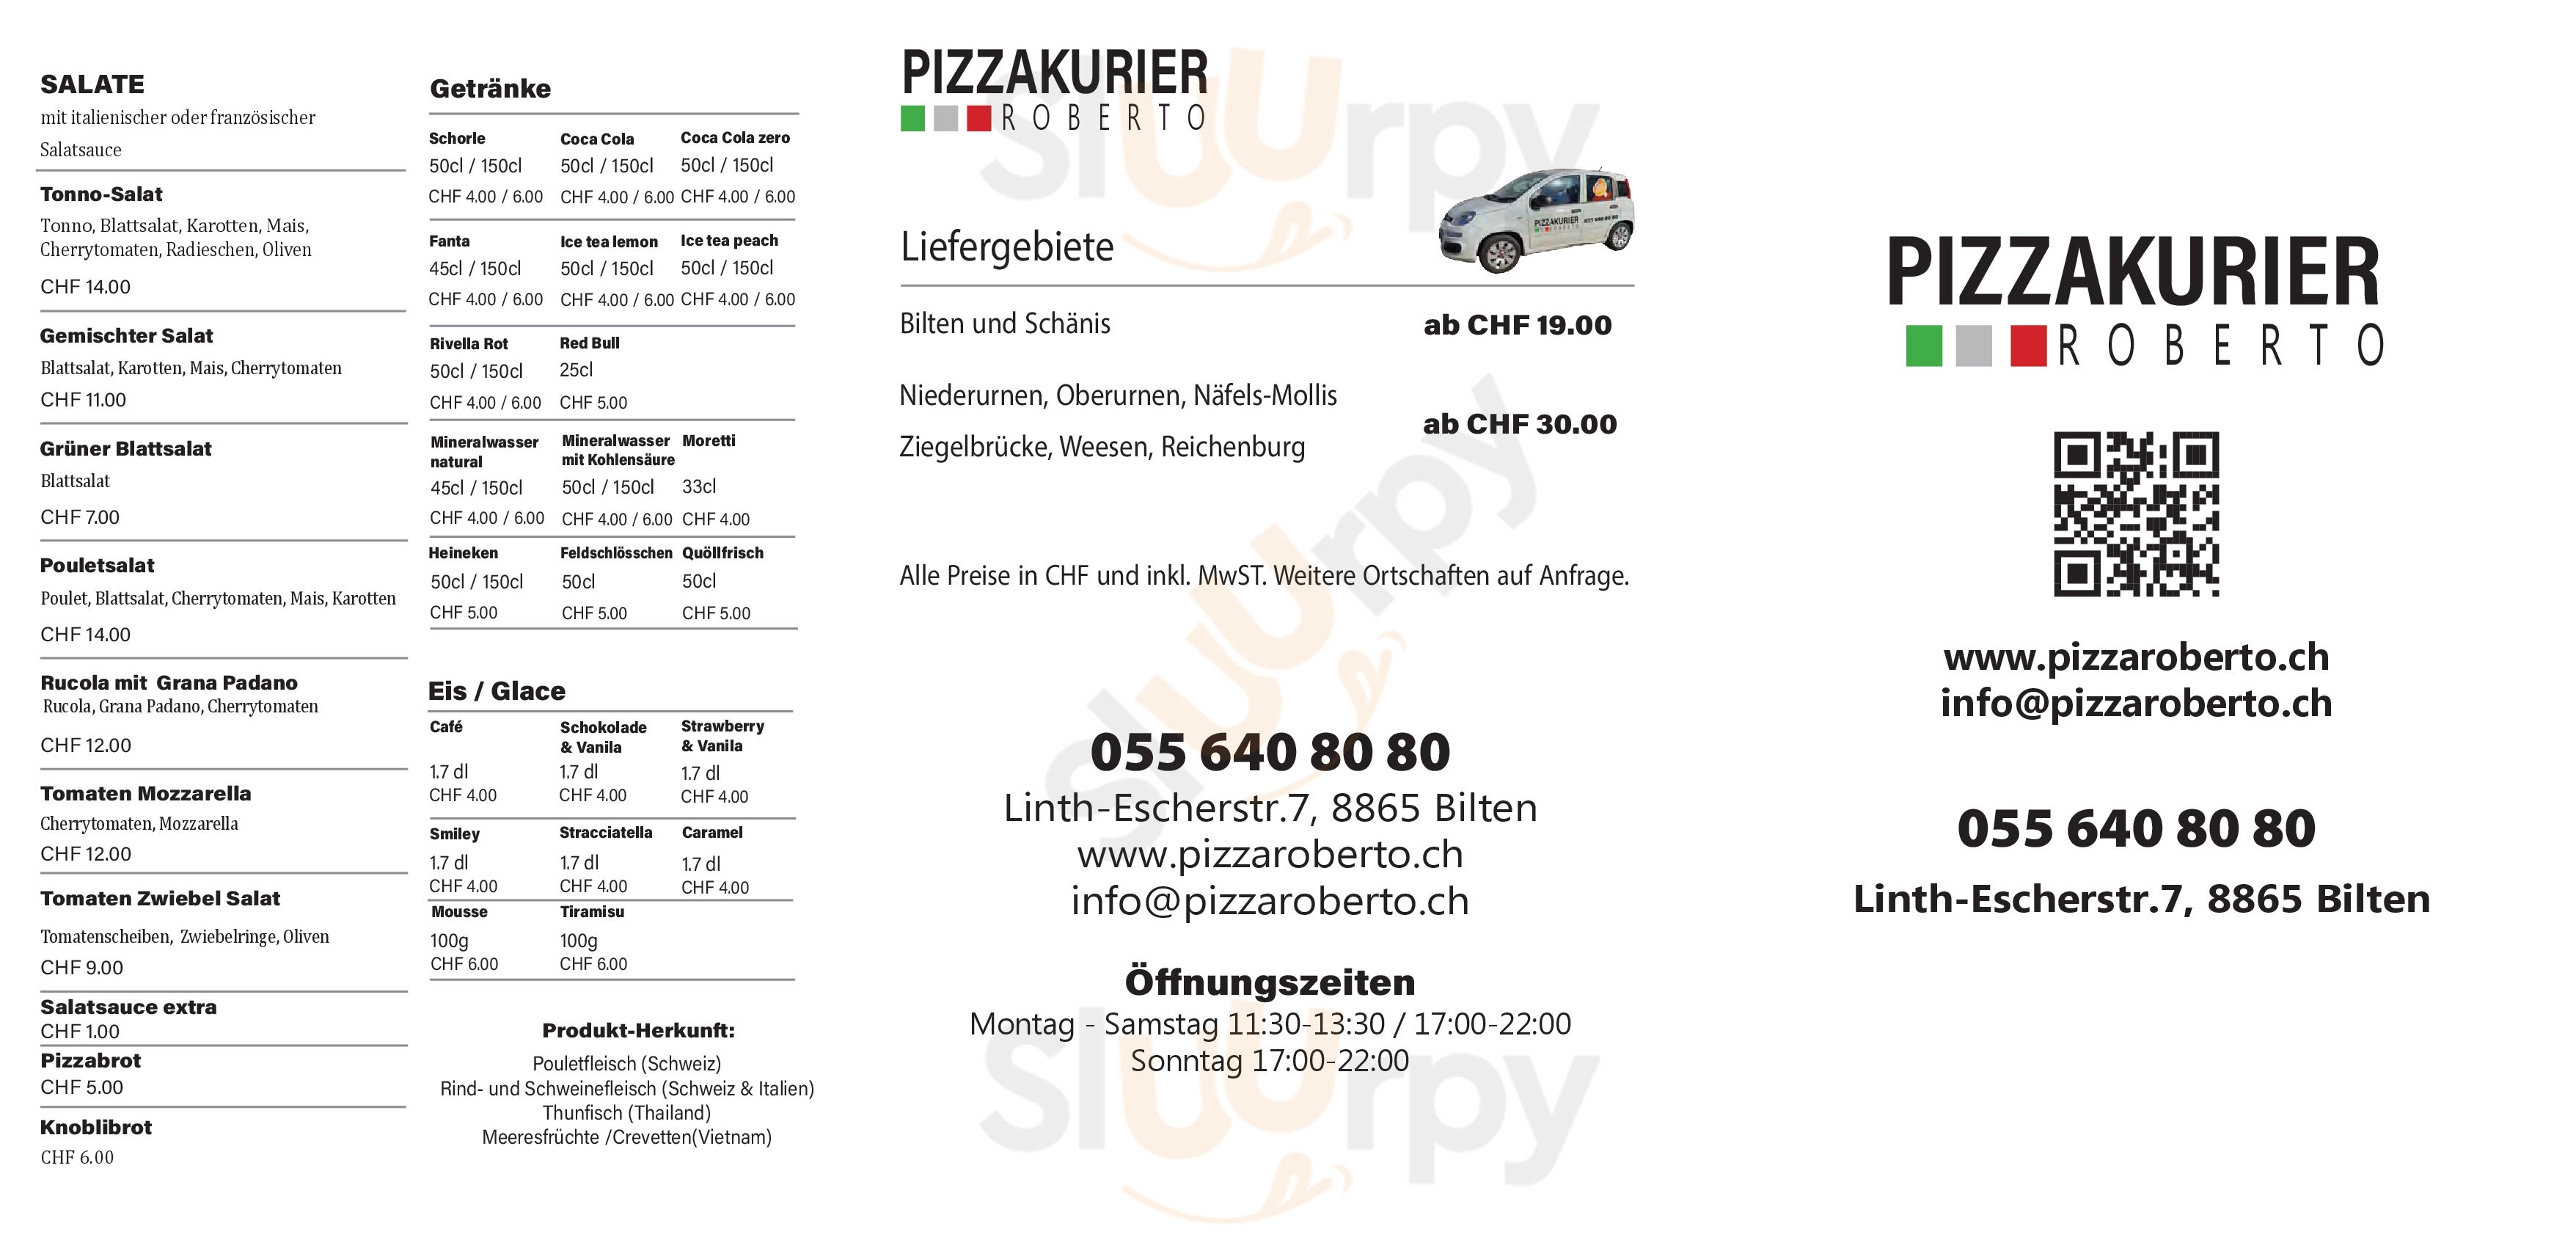 Pizza Roberto St. Gallen Menu - 1